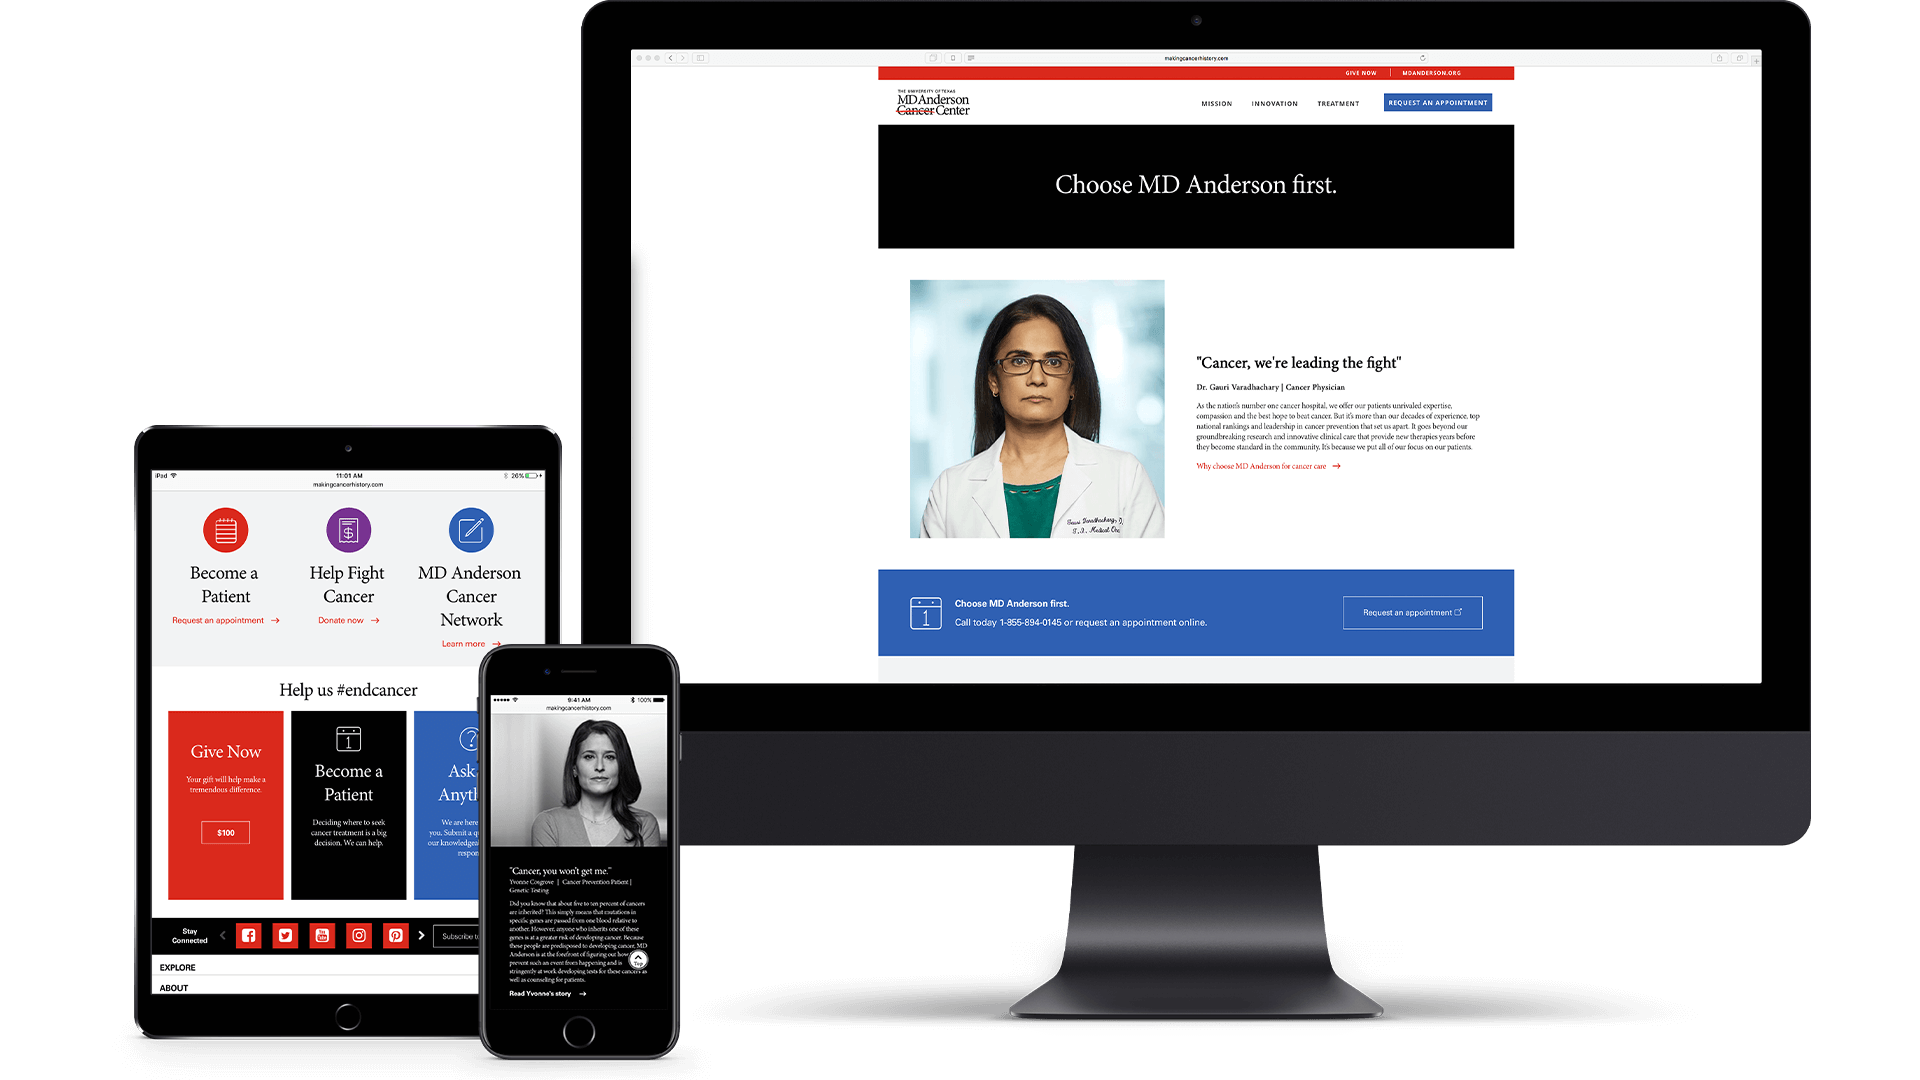 MD Anderson website displayed on desktop screen